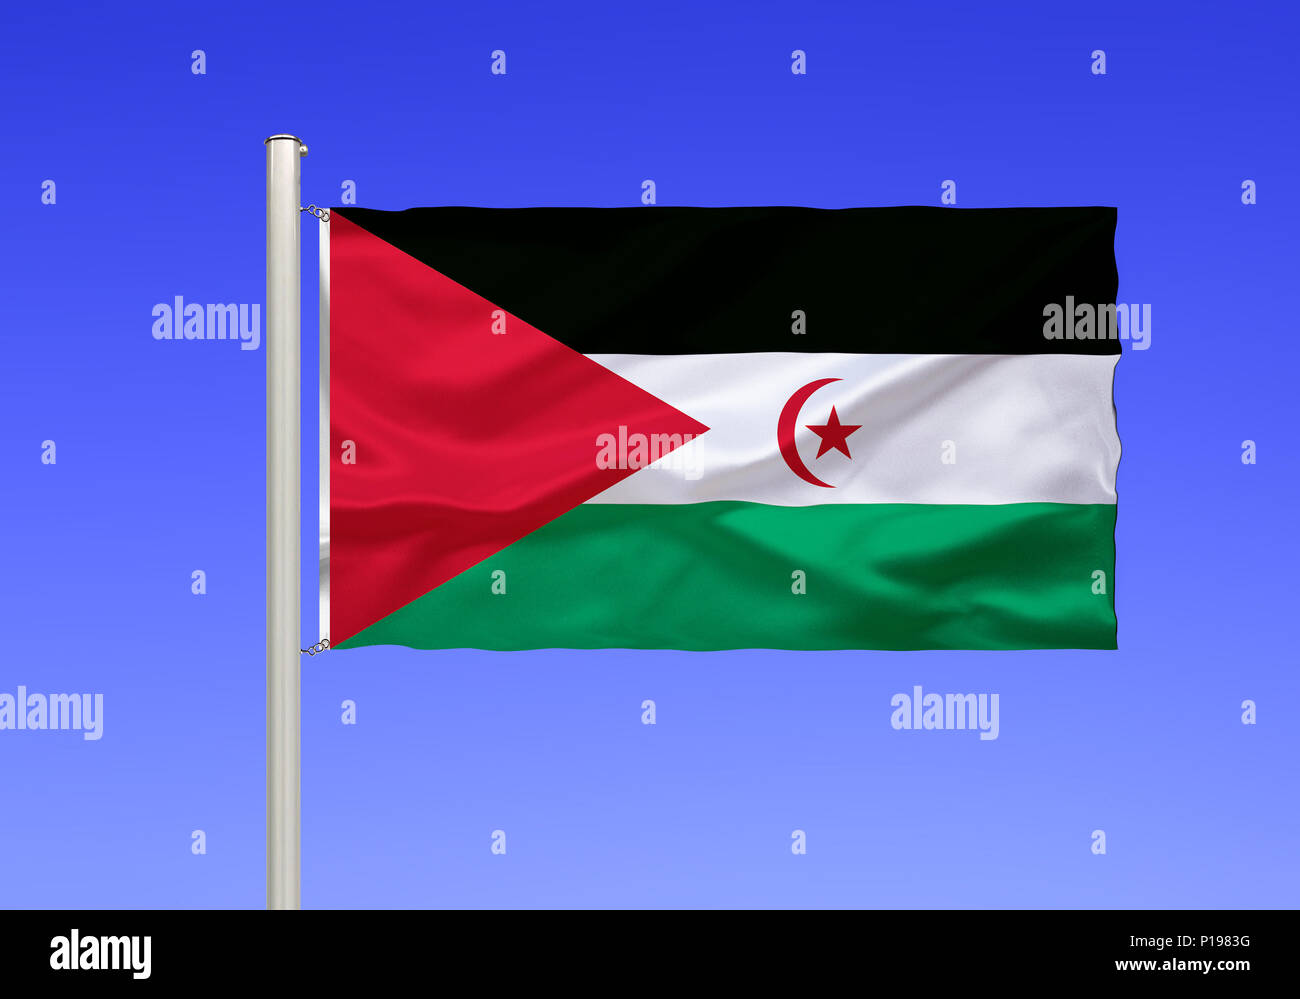 Bandiera del Sahara Occidentale, Repubblica araba dell Africa sub-sahariana, Flagge von Westsahara, Arabische Republik Sahara Foto Stock